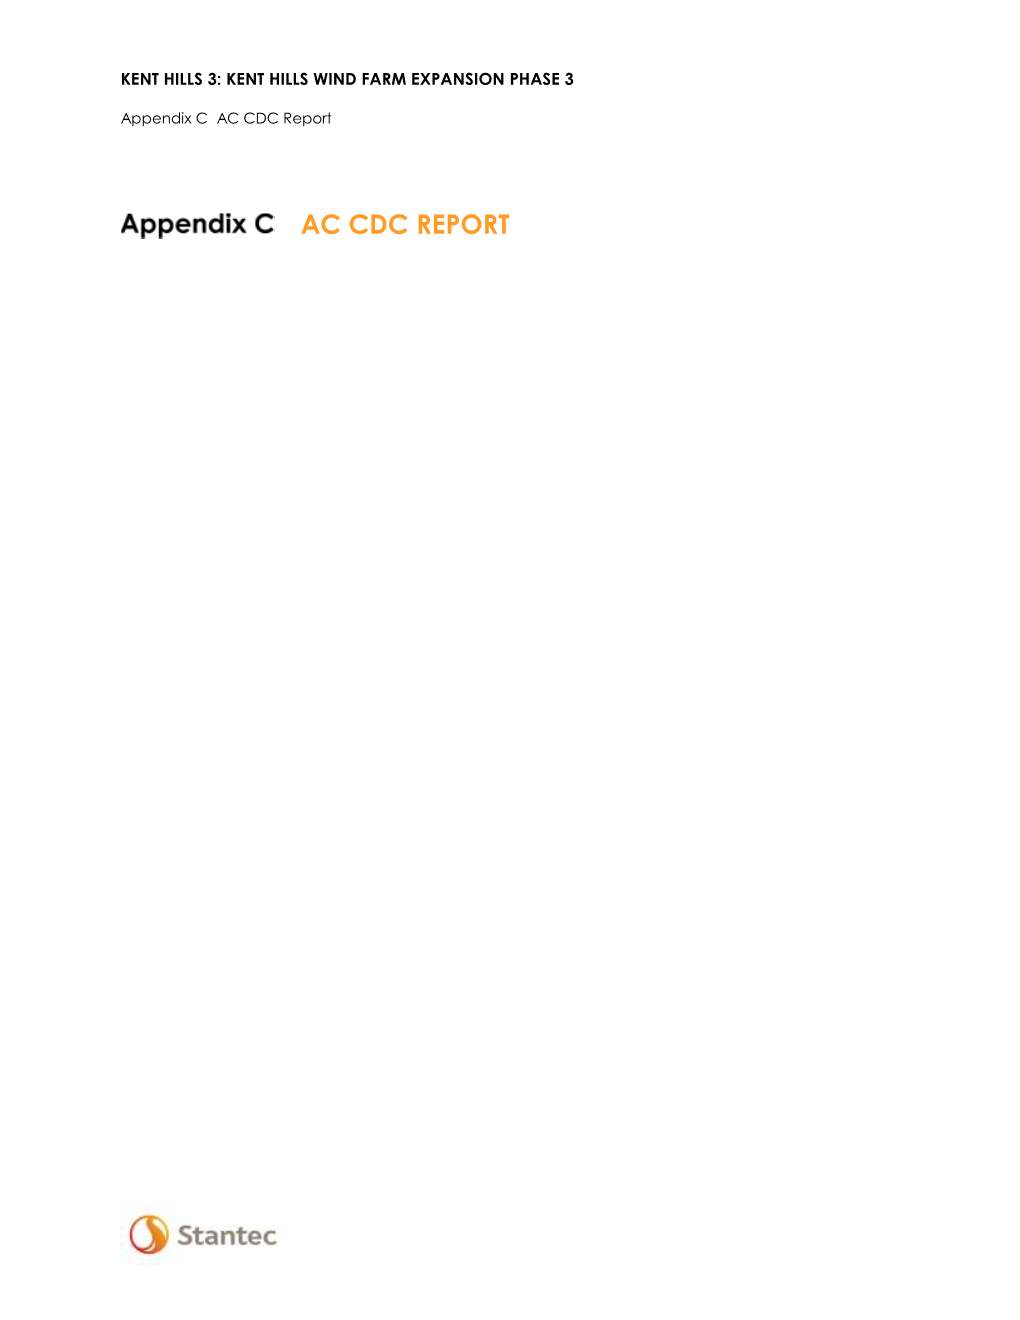 Appendix C AC CDC Report